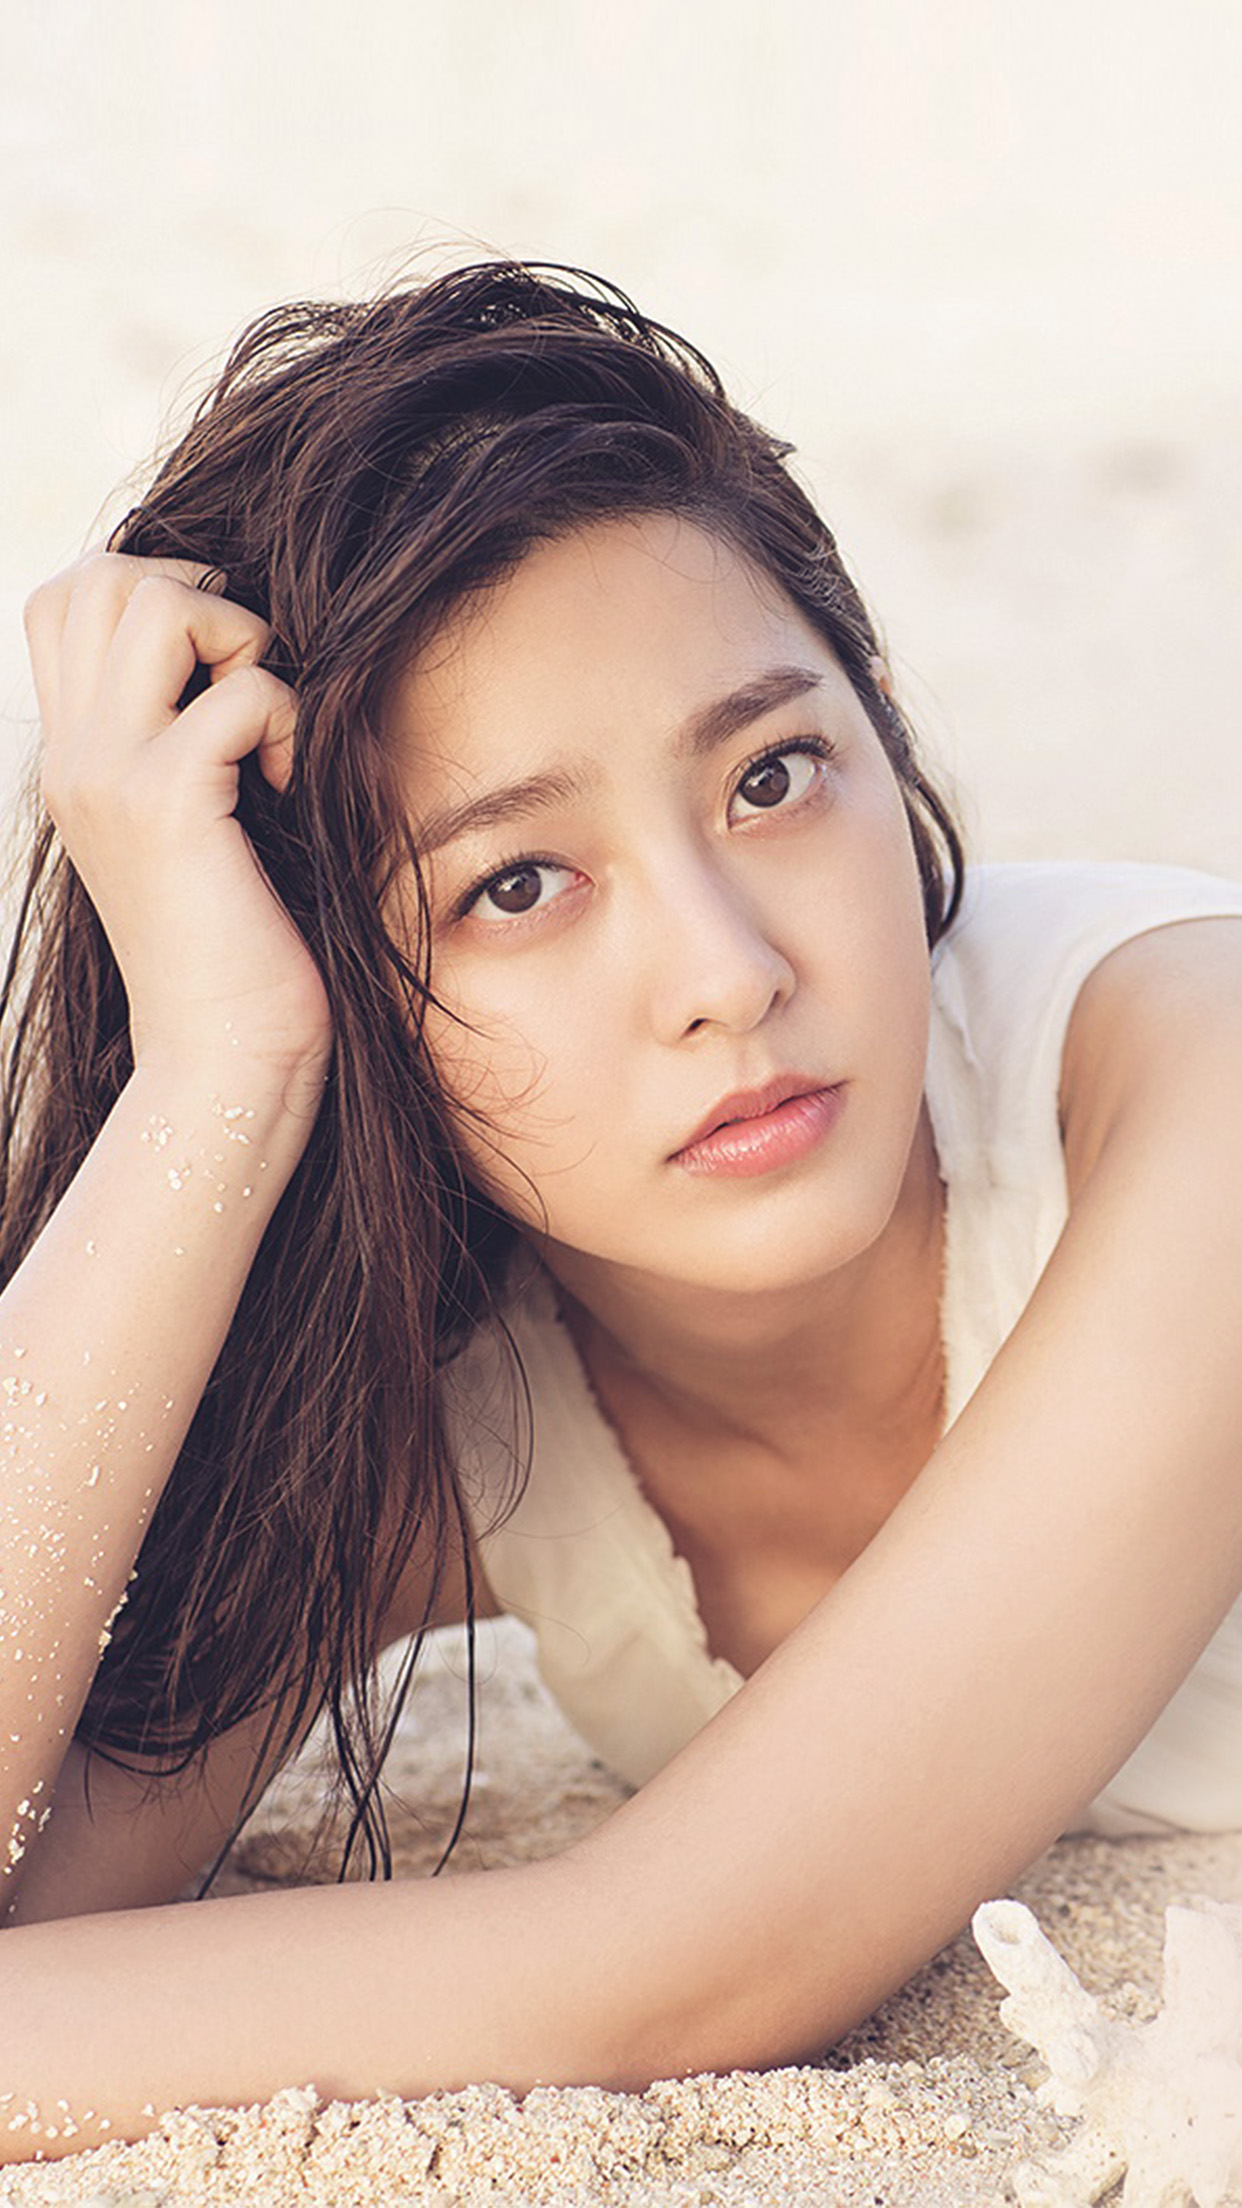 Kpop Girl Seungyeon Beach Android wallpaper